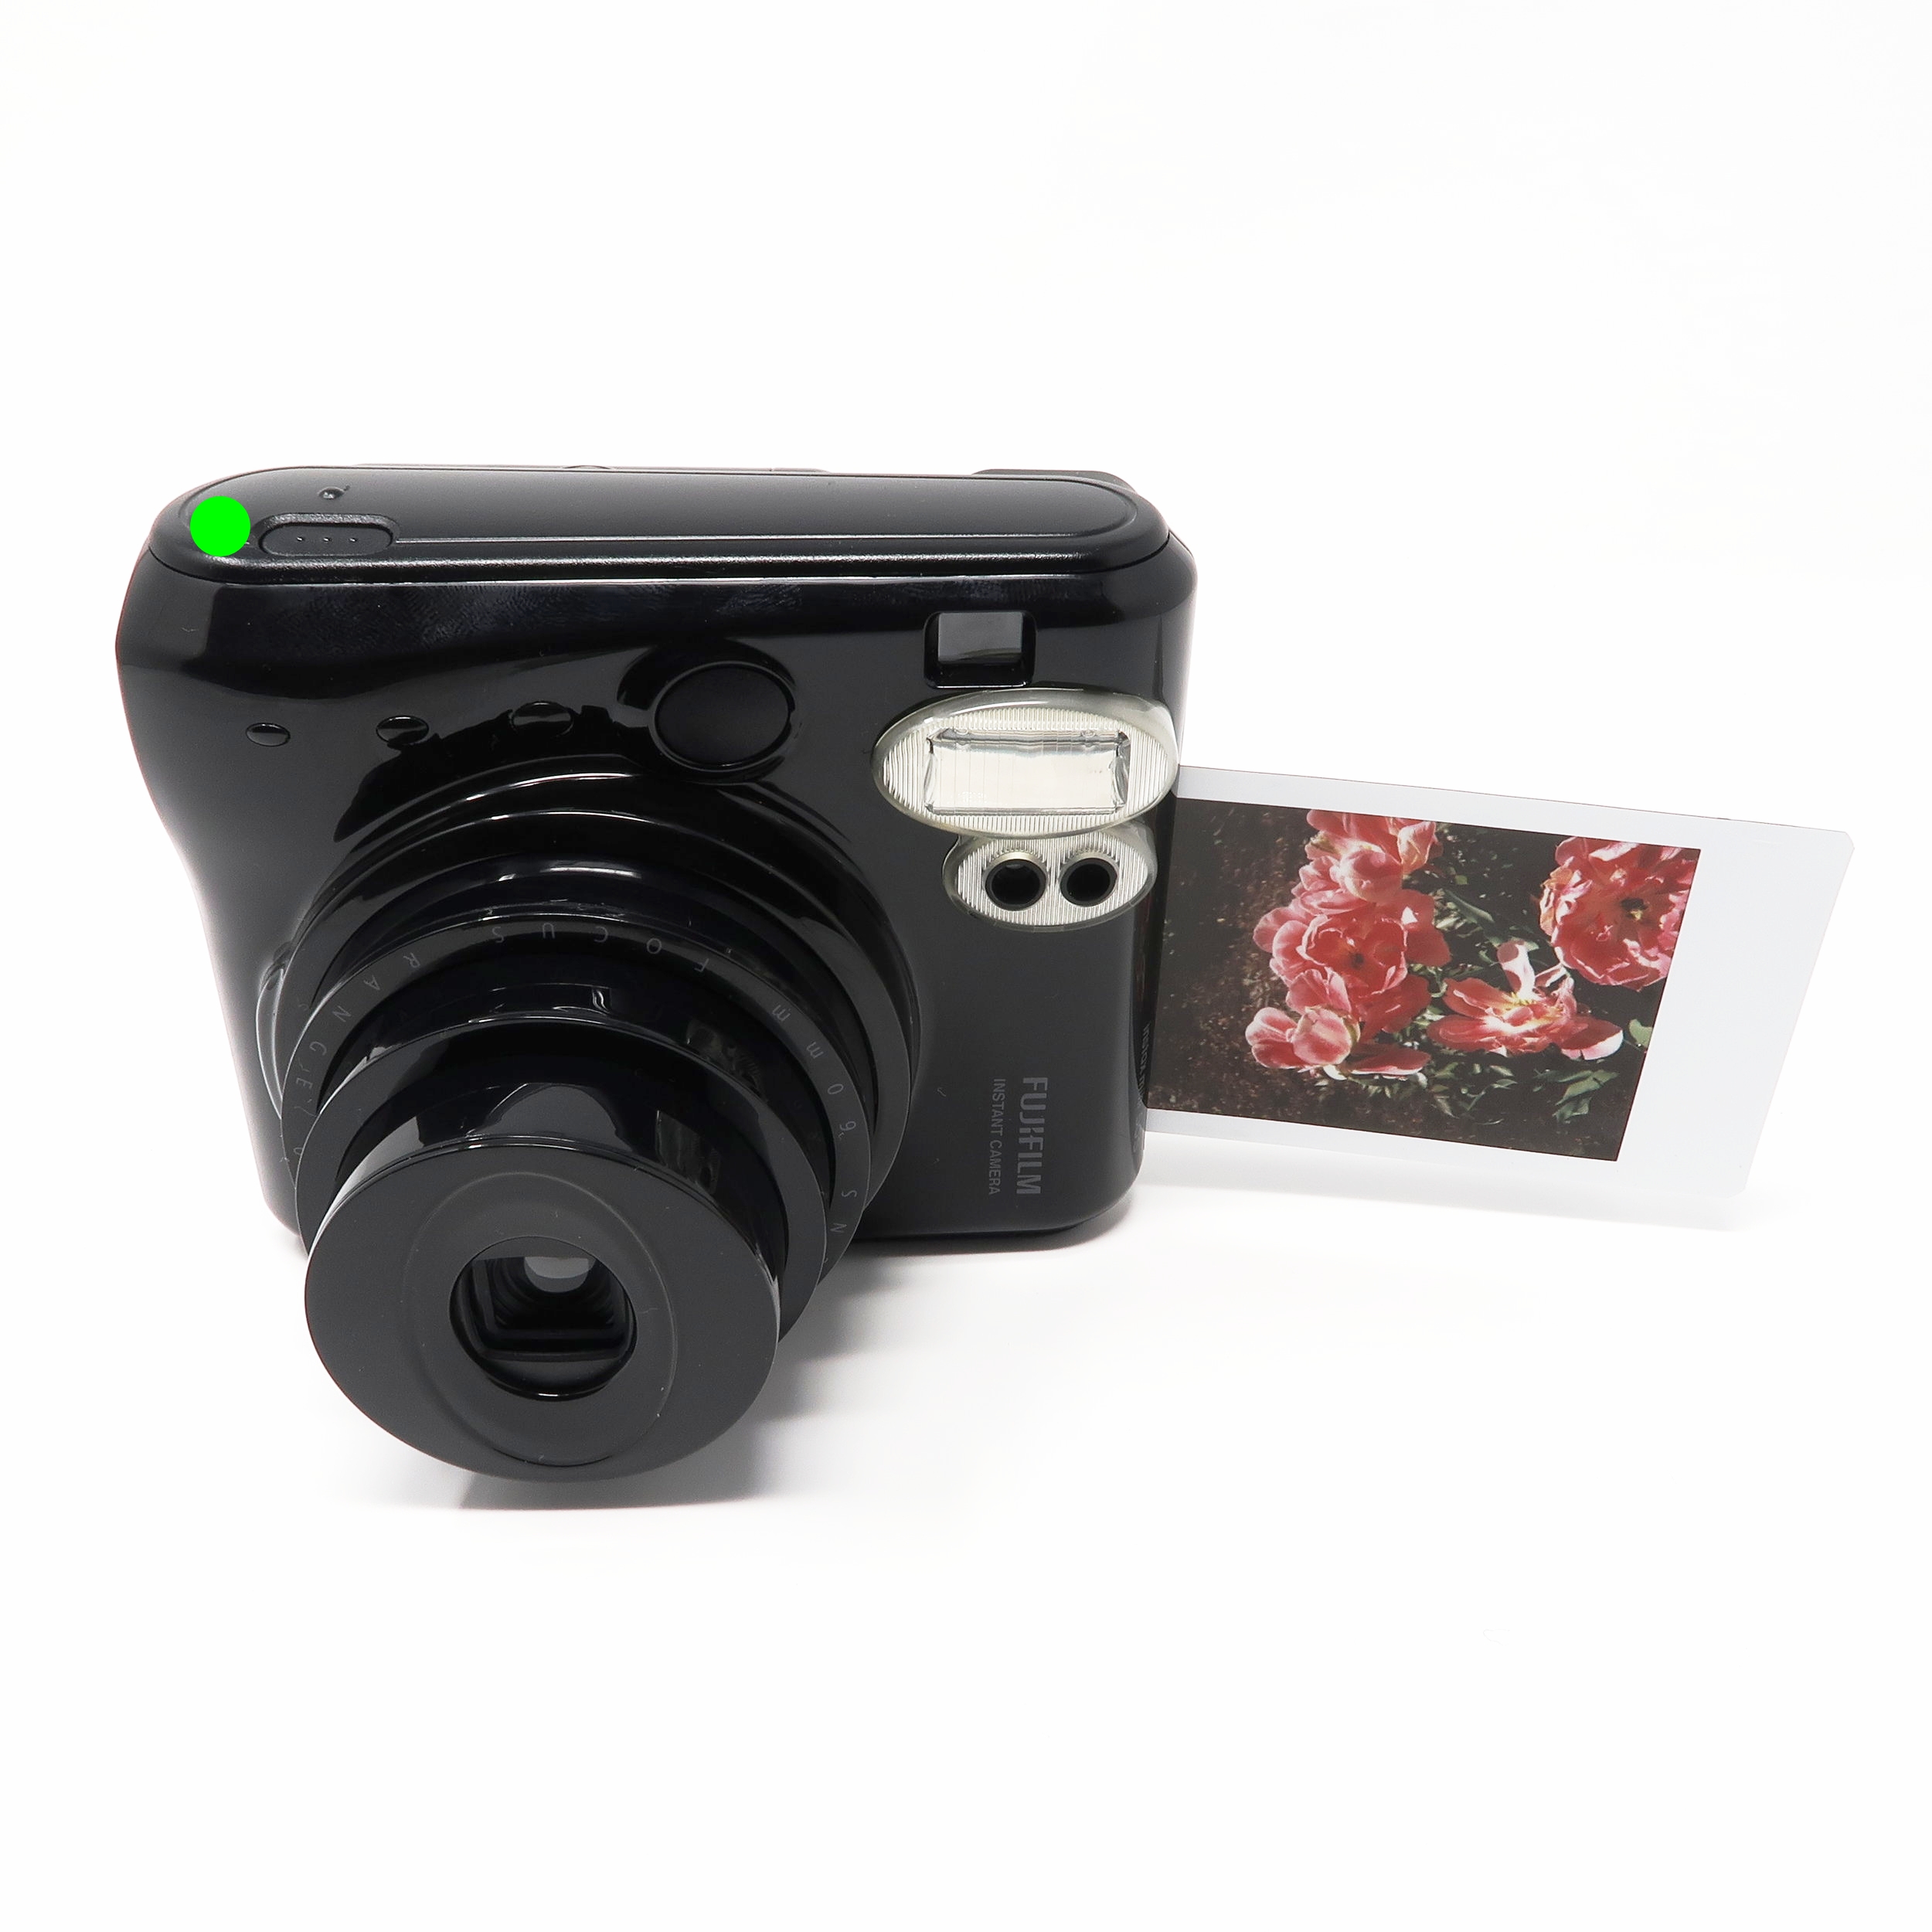 Fuji Instax Mini 50S shutter release button specifically designed for landscape orientated photos.